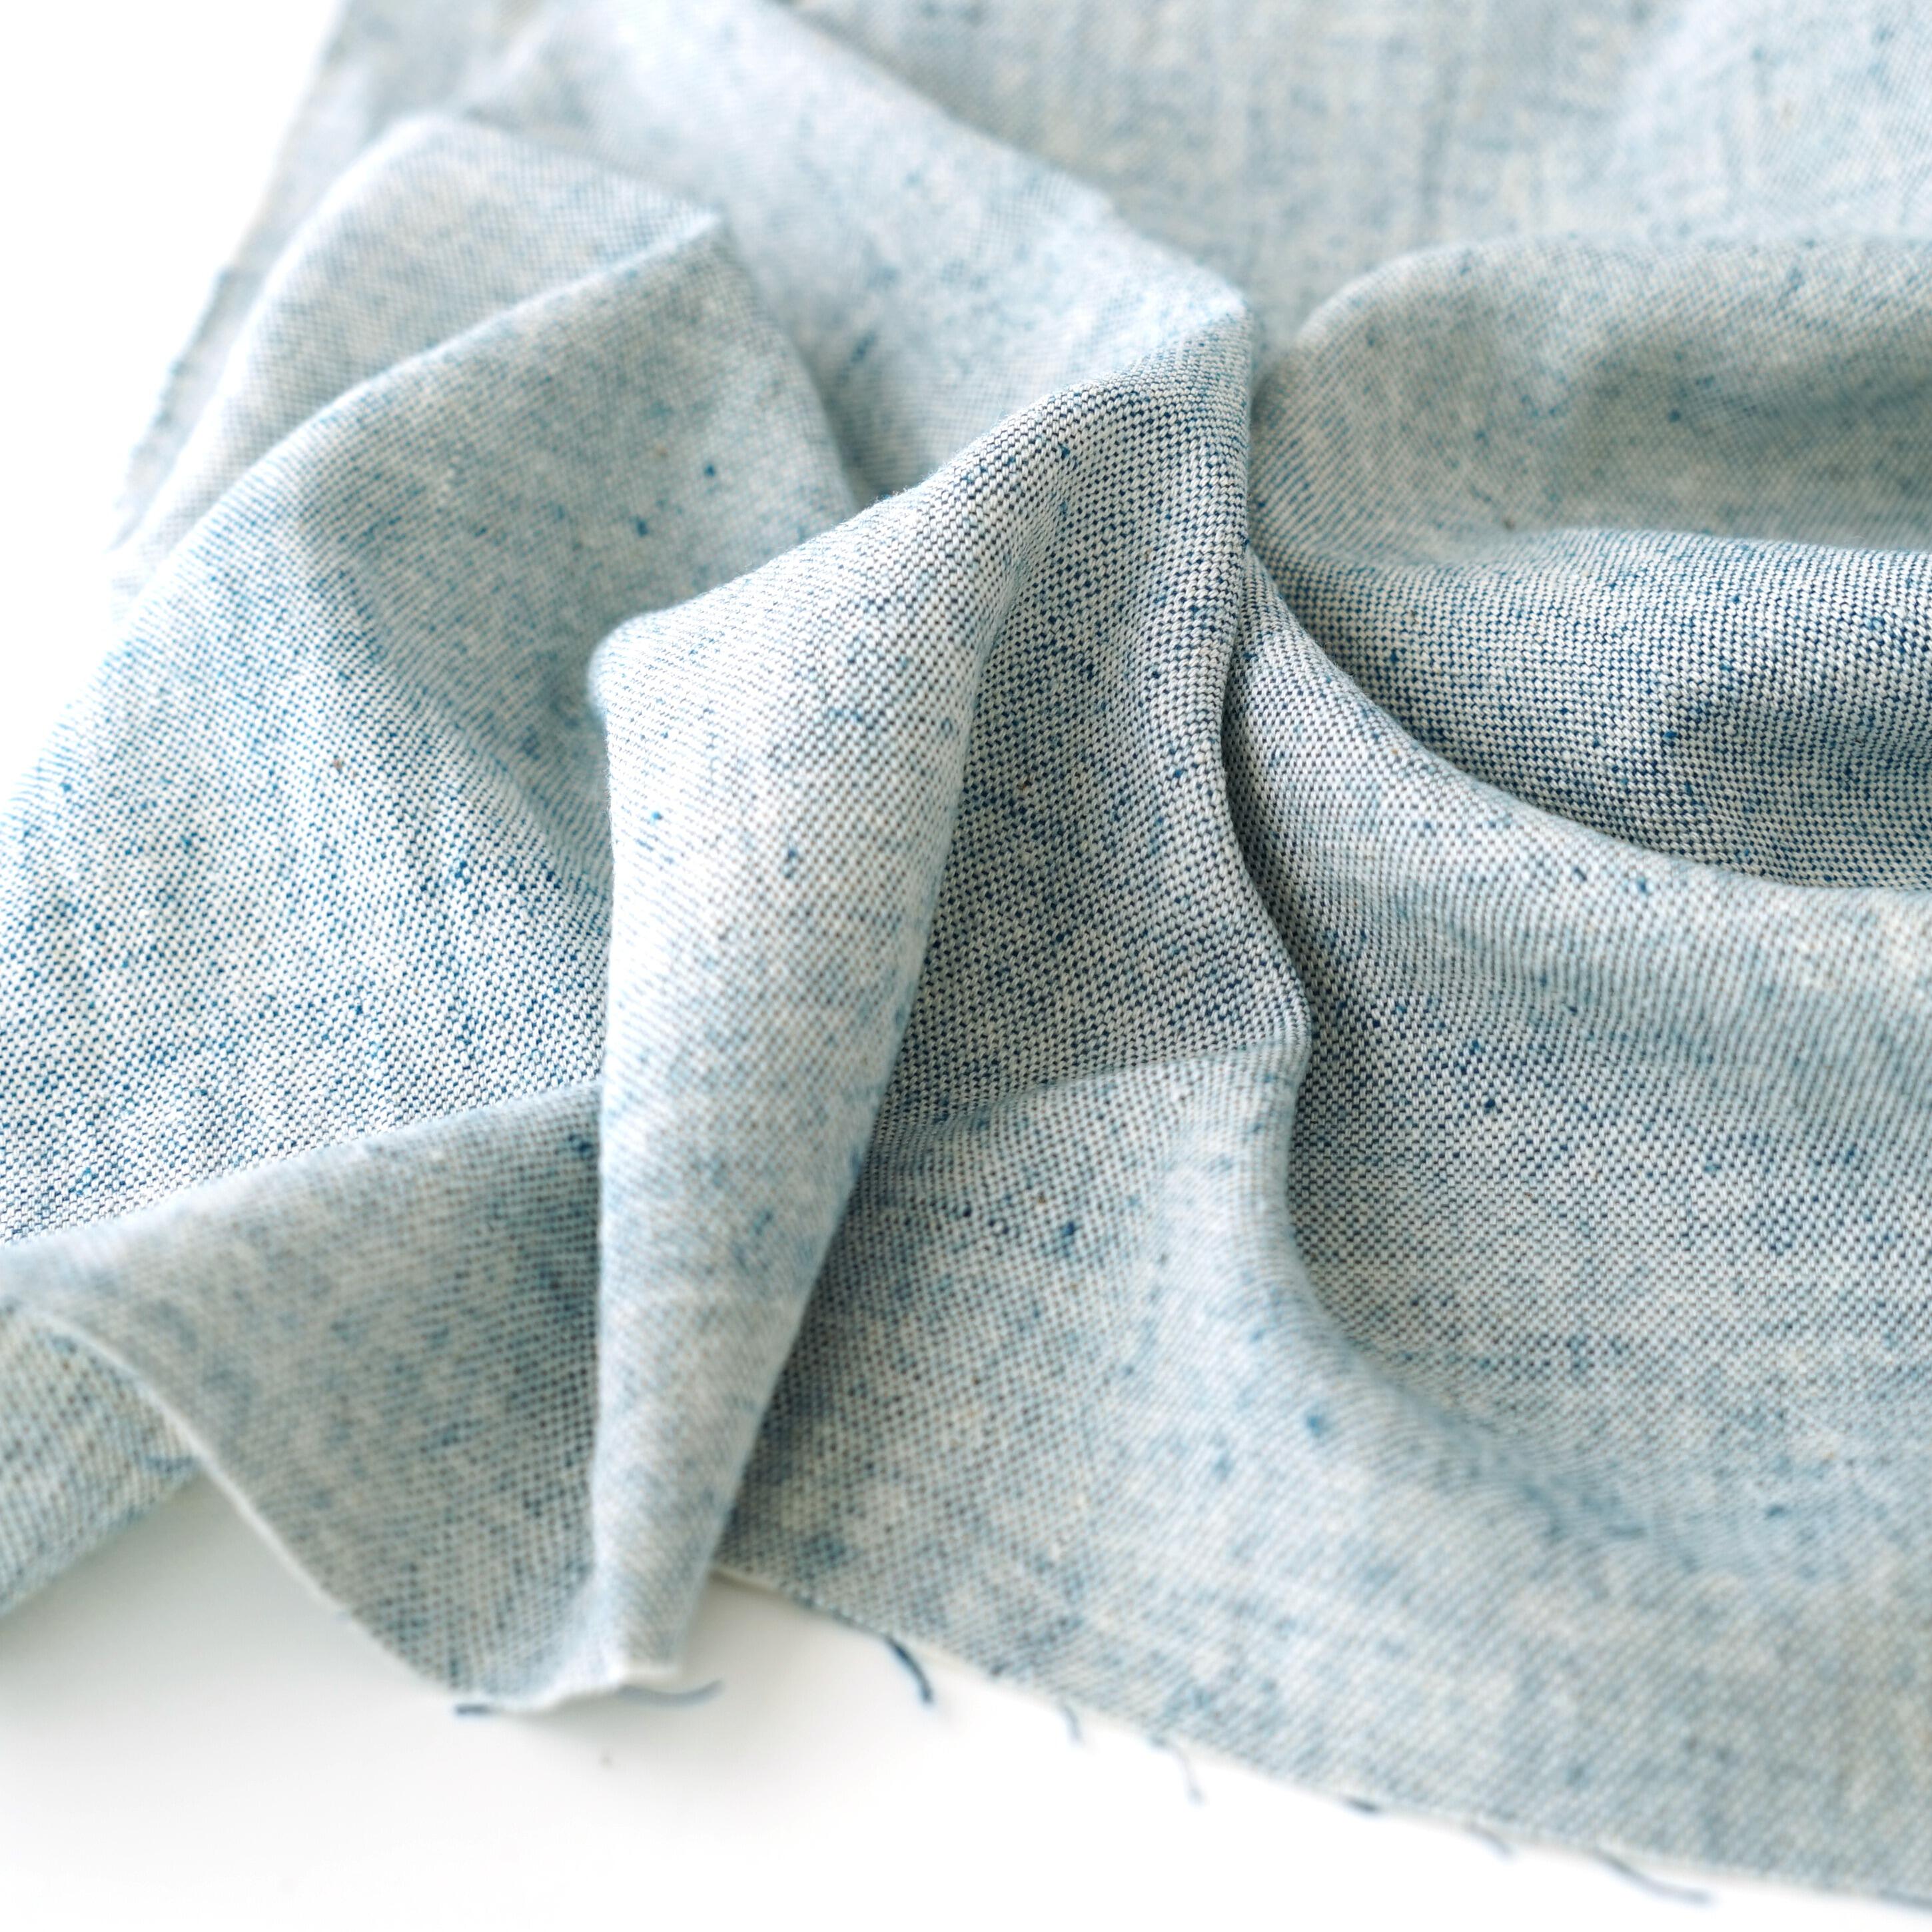 Organic Kala Cotton - Handloom Woven - Irregular Basket Weave - 2 by 1 - White & Blue - Yarn Dye - Shot Cotton - Contrast